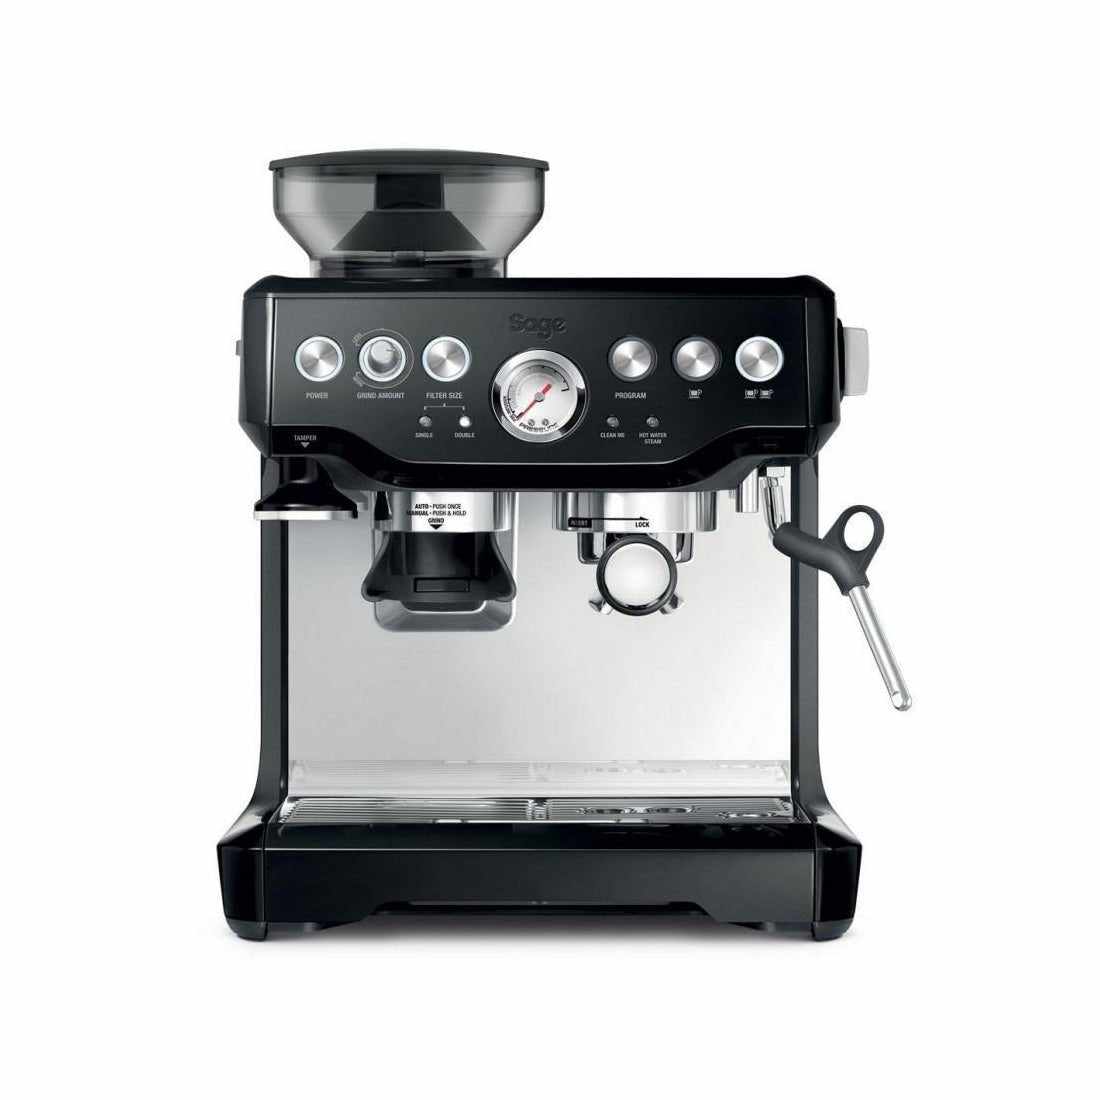 Sage Barista Express - La máquina de café espresso definitiva para